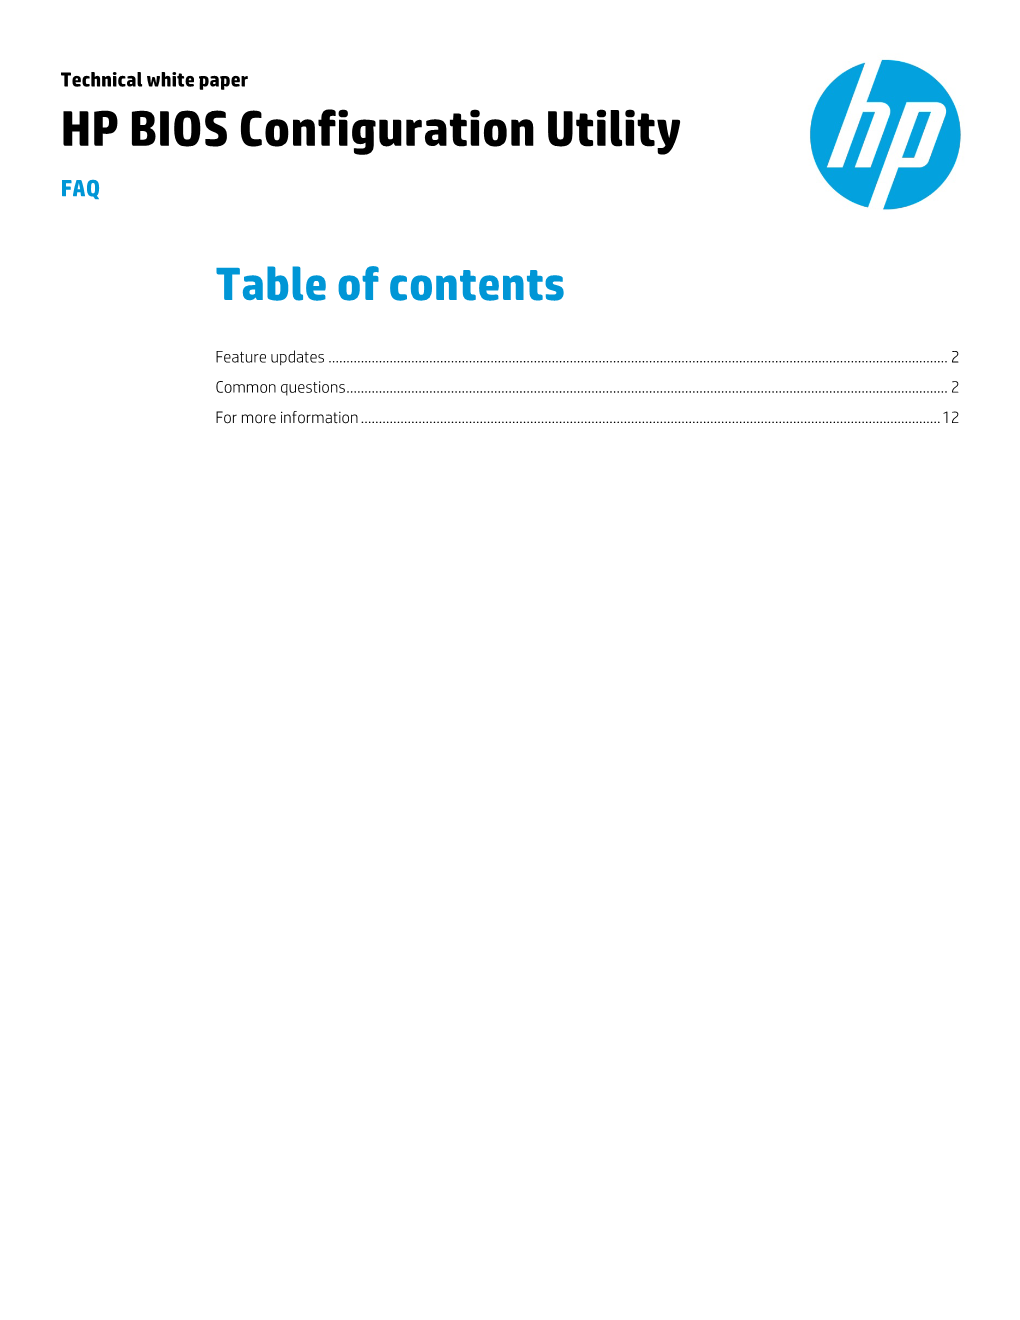 HP BIOS Configuration Utility FAQ